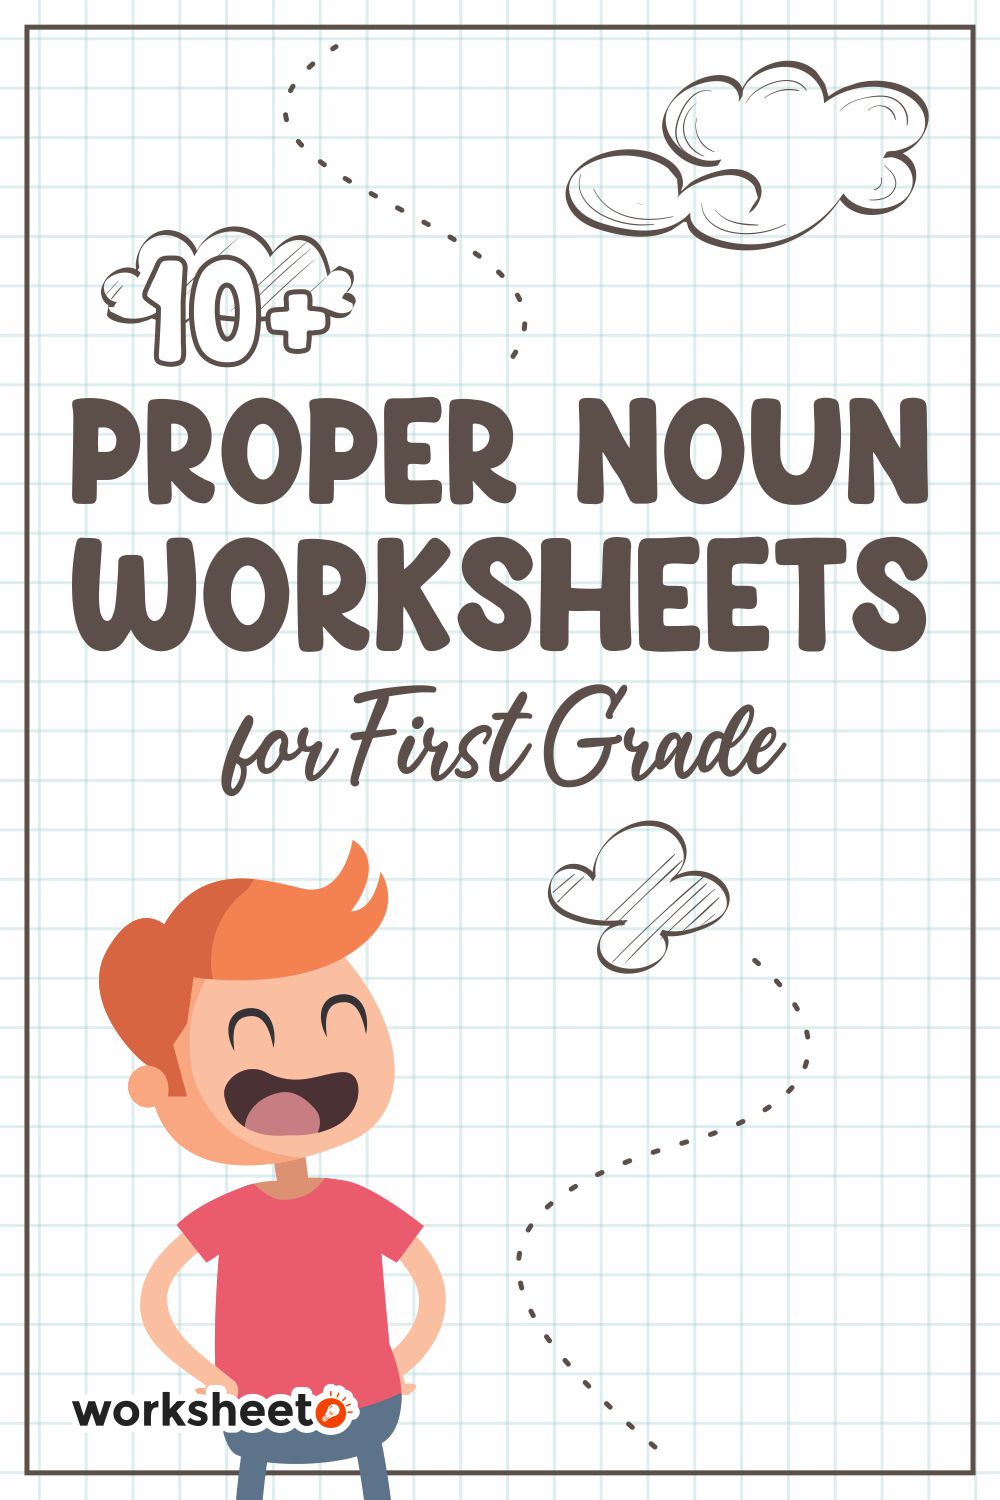 18 Images of Proper Noun Worksheets For First Grade